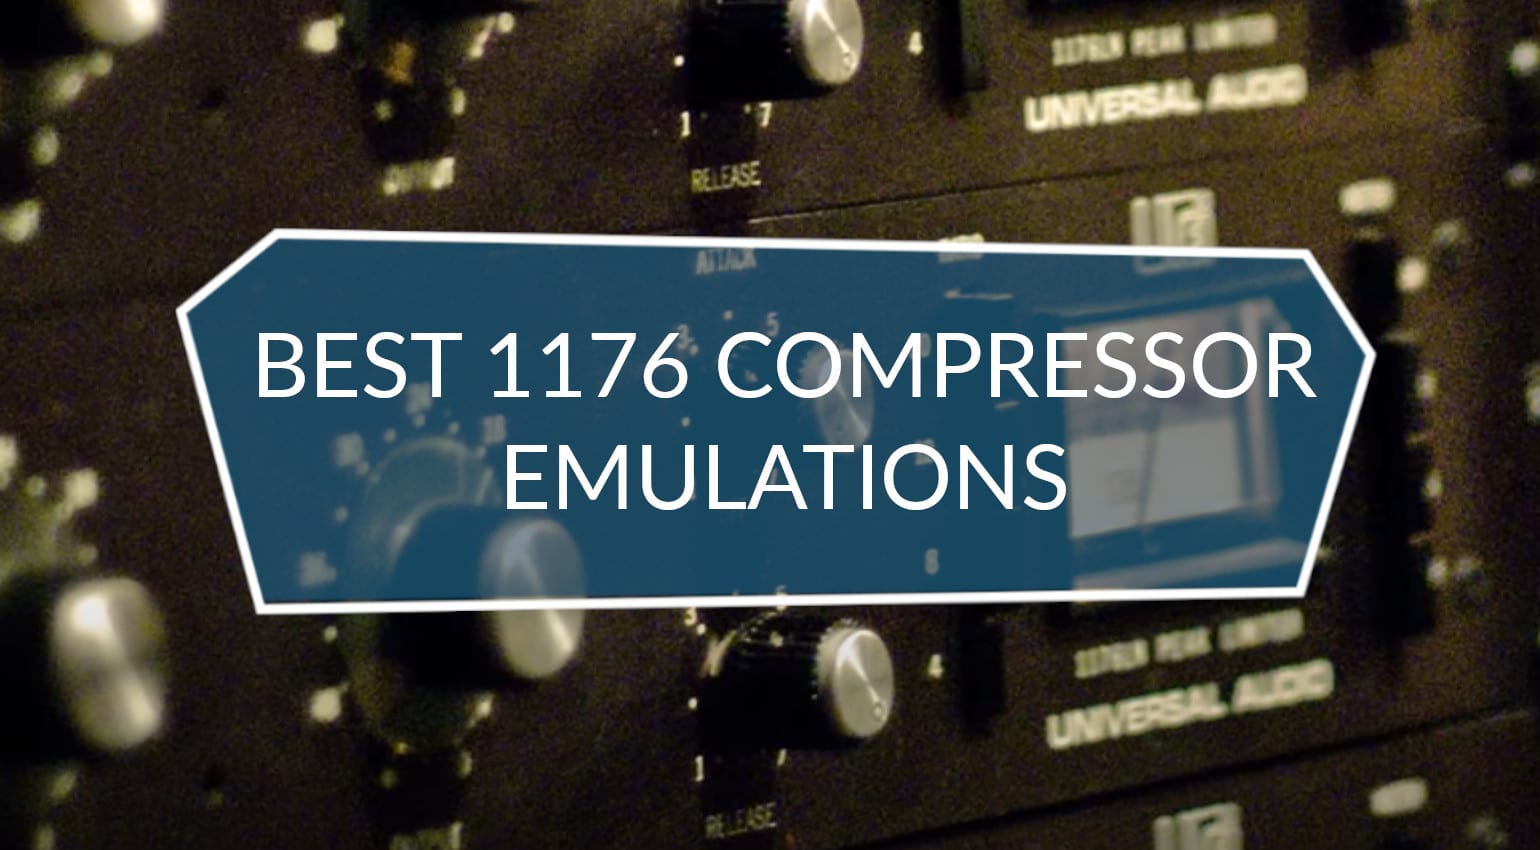 1176-Compressor-emulations.jpg